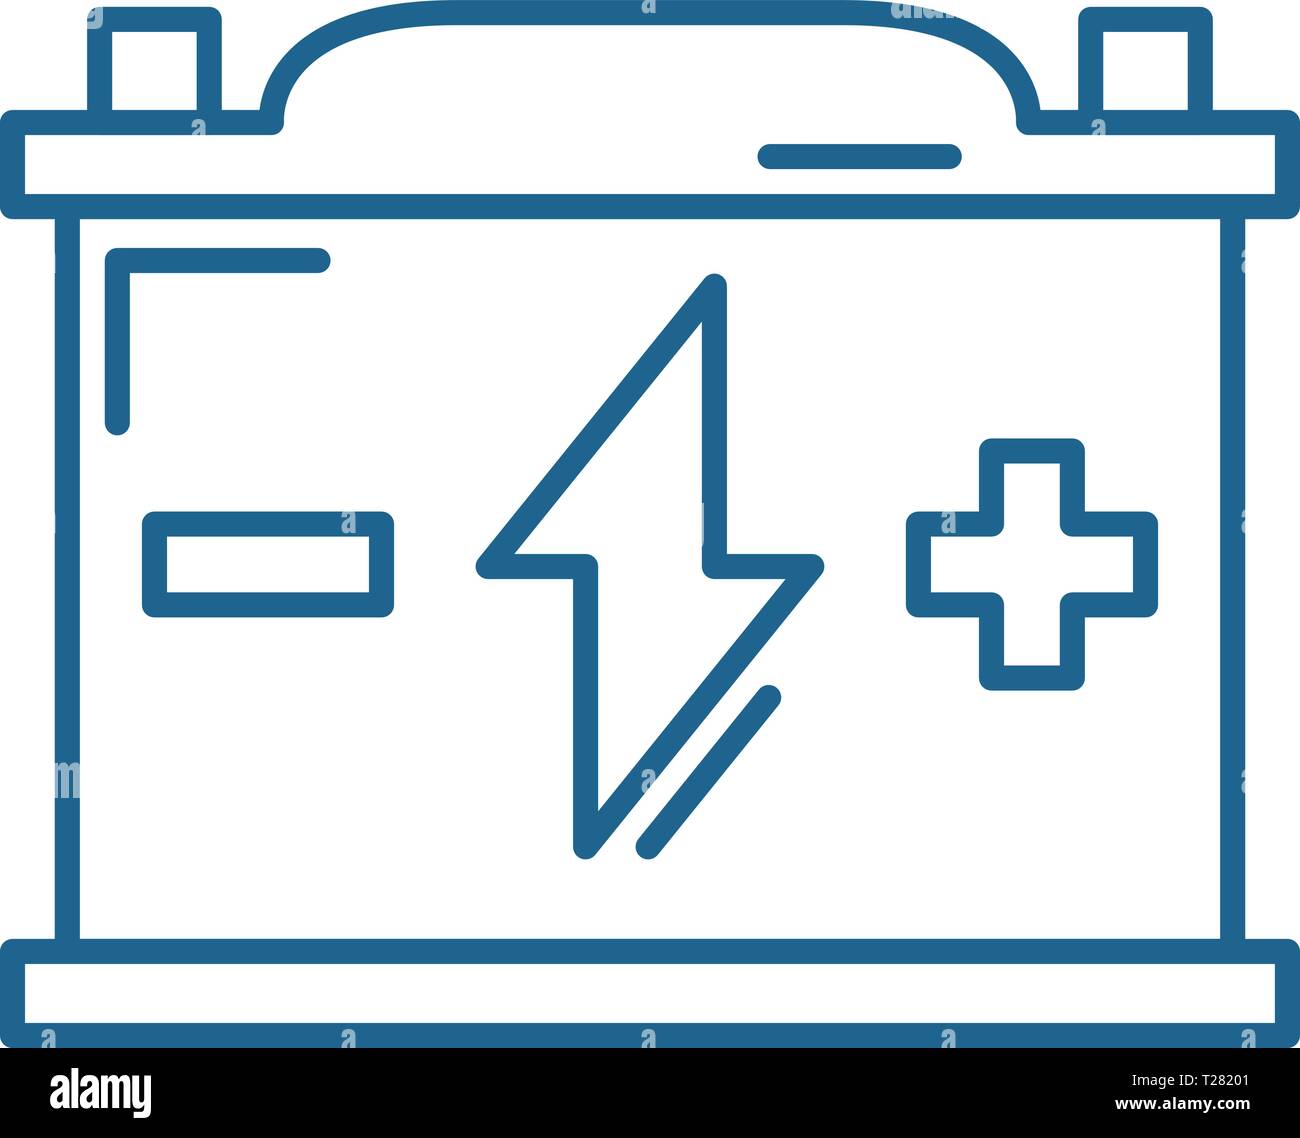 Batterie Symbol Leitung Konzept Batterie Leer Vektor Symbol Zeichen Umriss Abbildung Stock Vektorgrafik Alamy